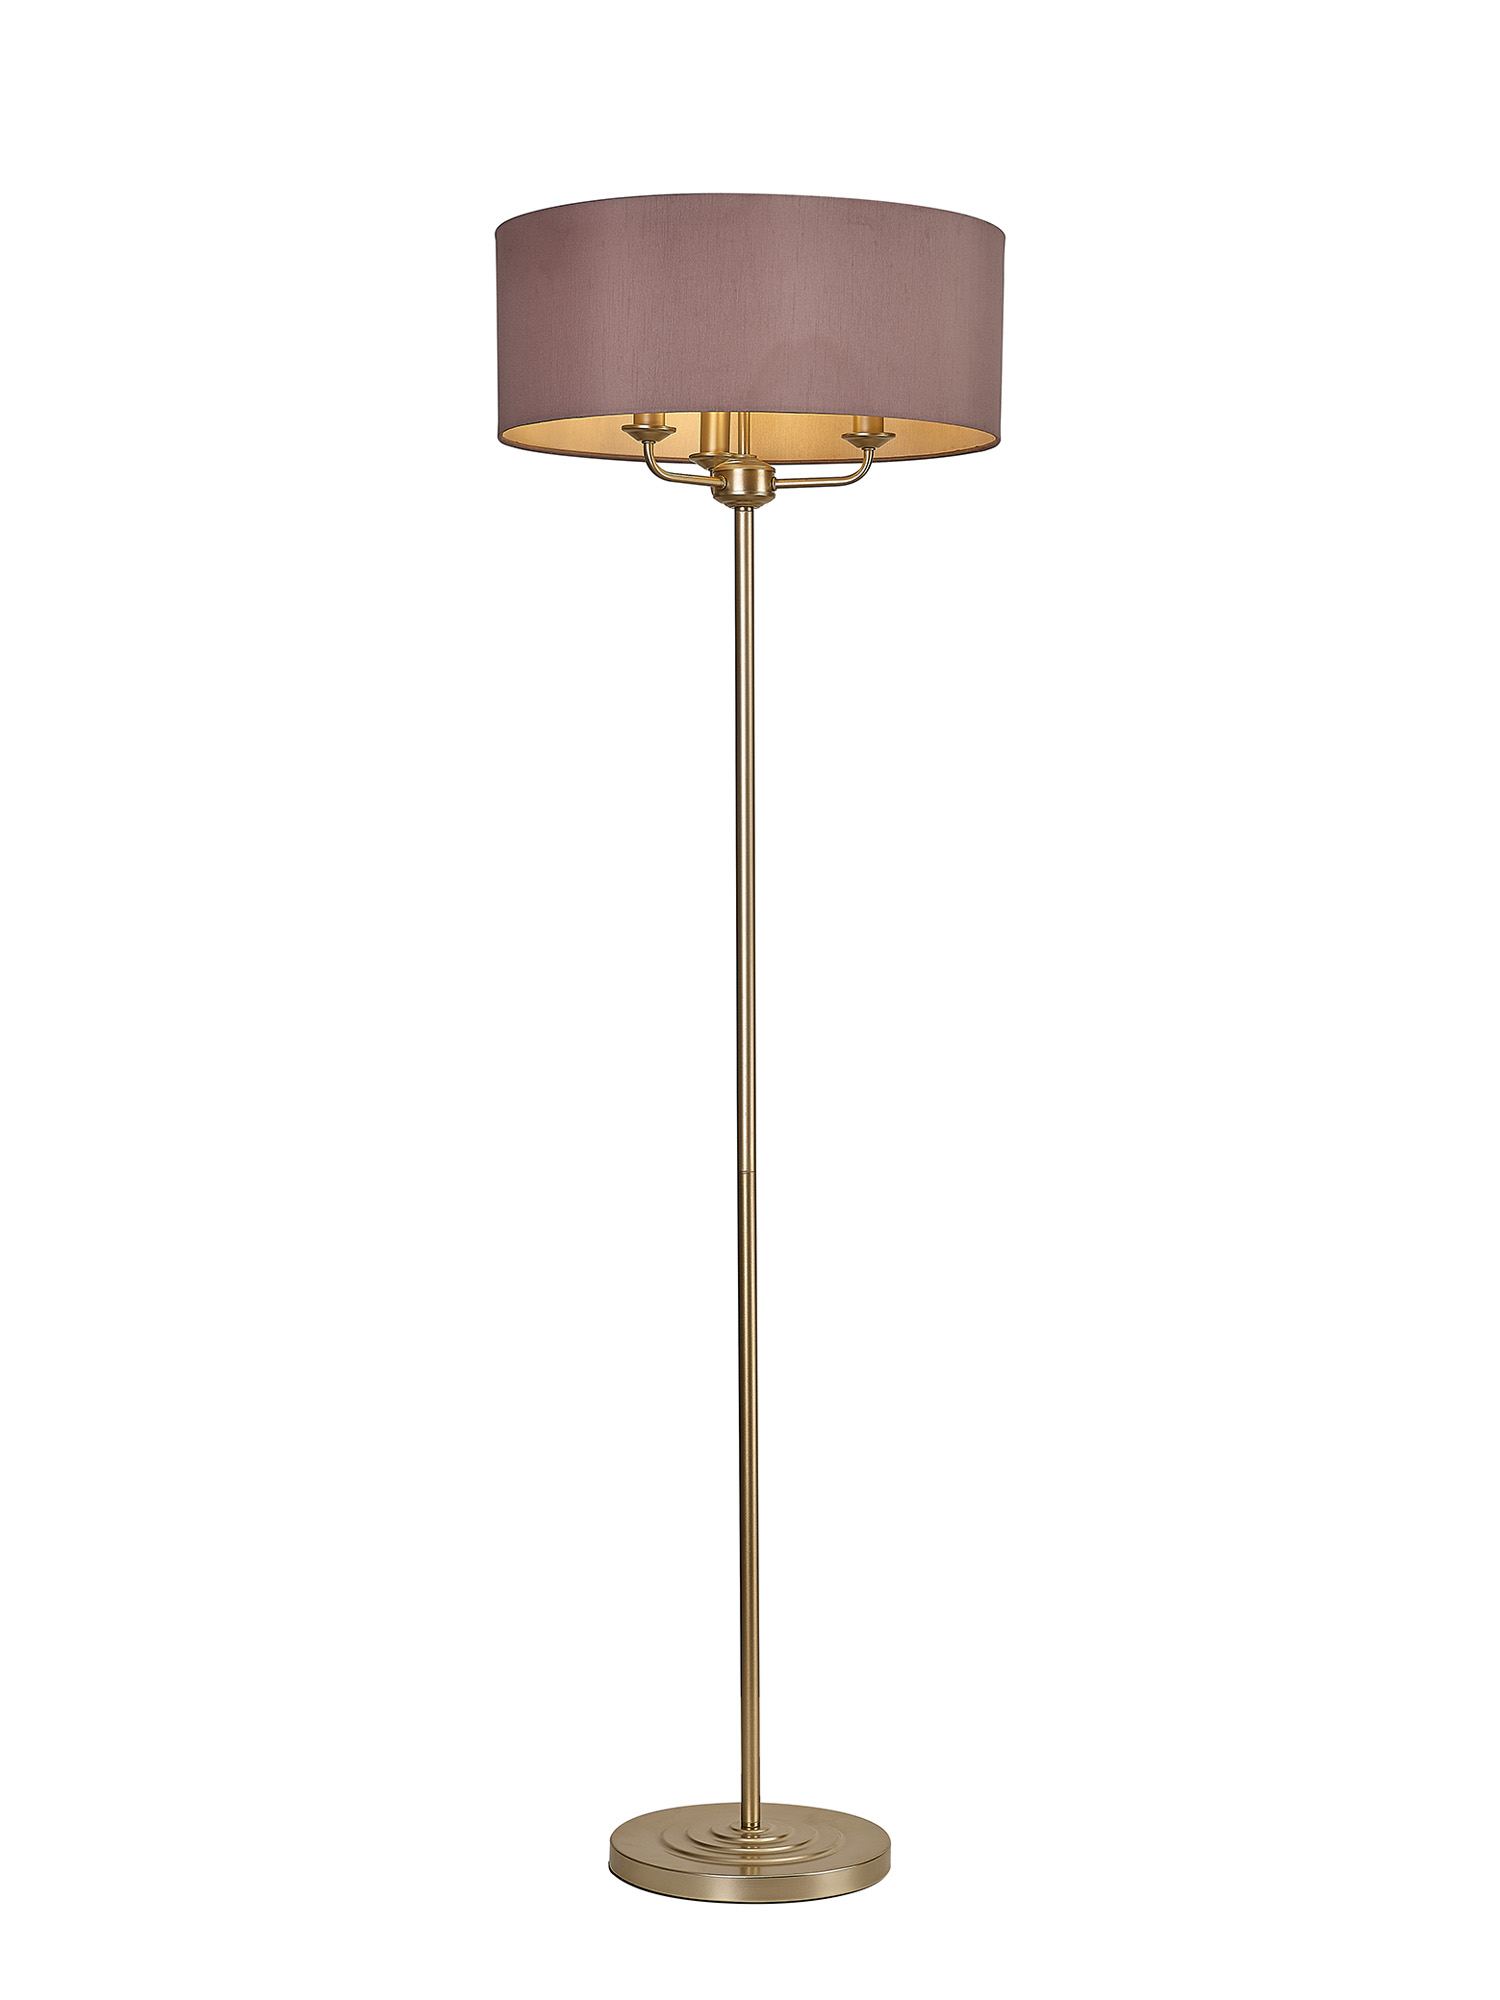 DK1004  Banyan 45cm 3 Light Floor Lamp Champagne Gold, Taupe